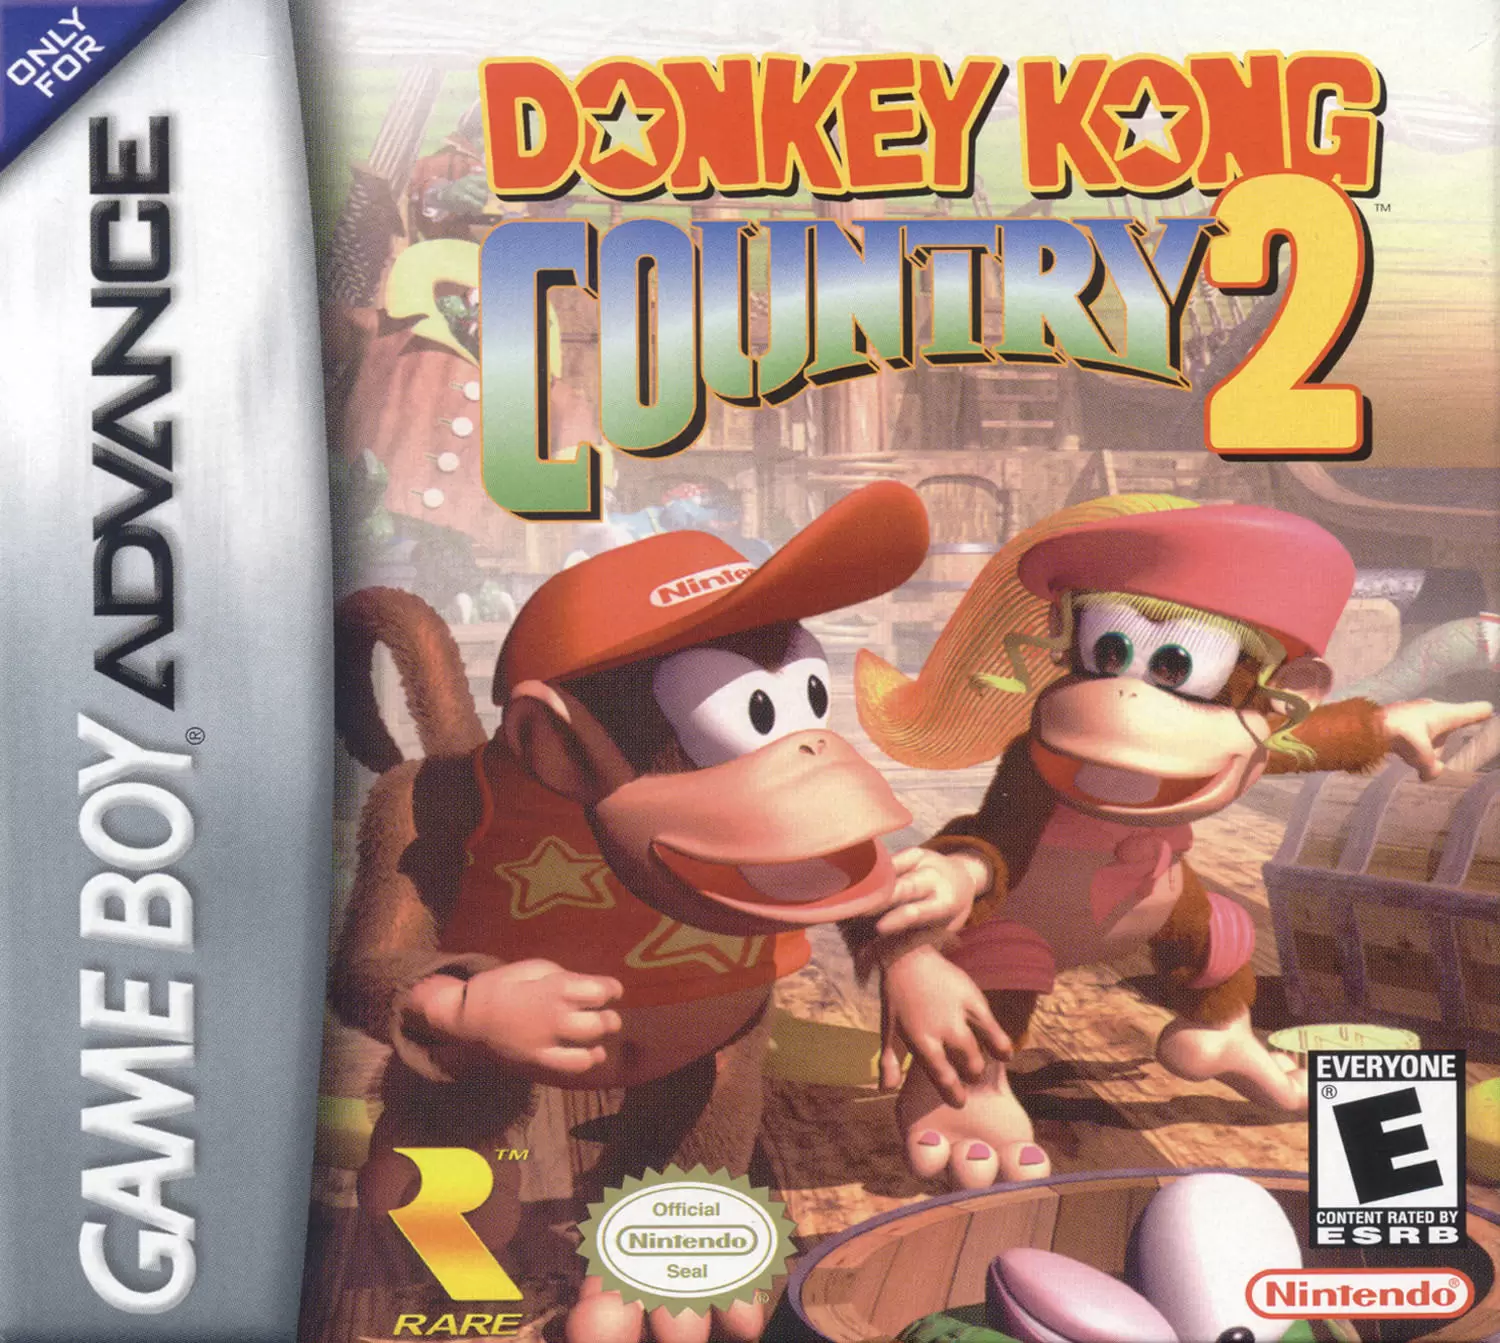 Game Boy Advance Games - Donkey Kong Country 2